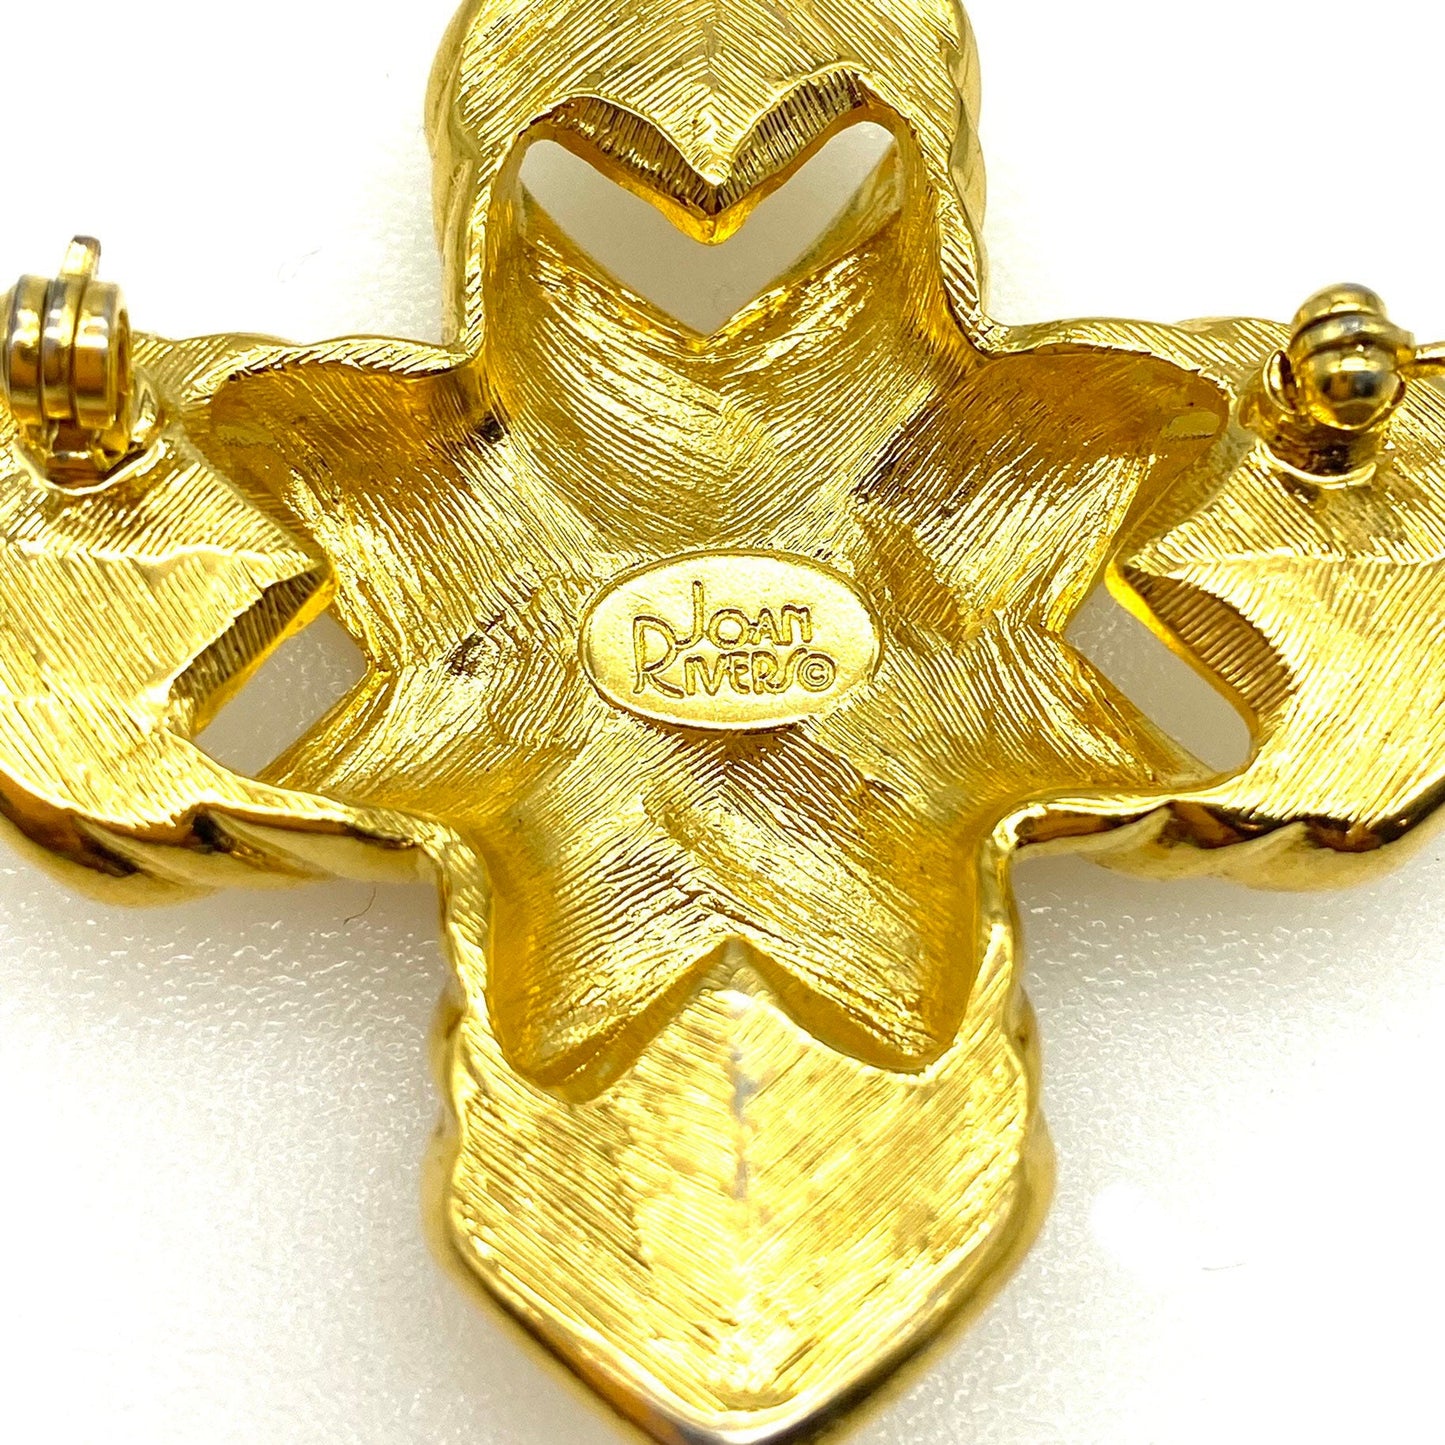 Joan Rivers Gold Plated Cross Brooch